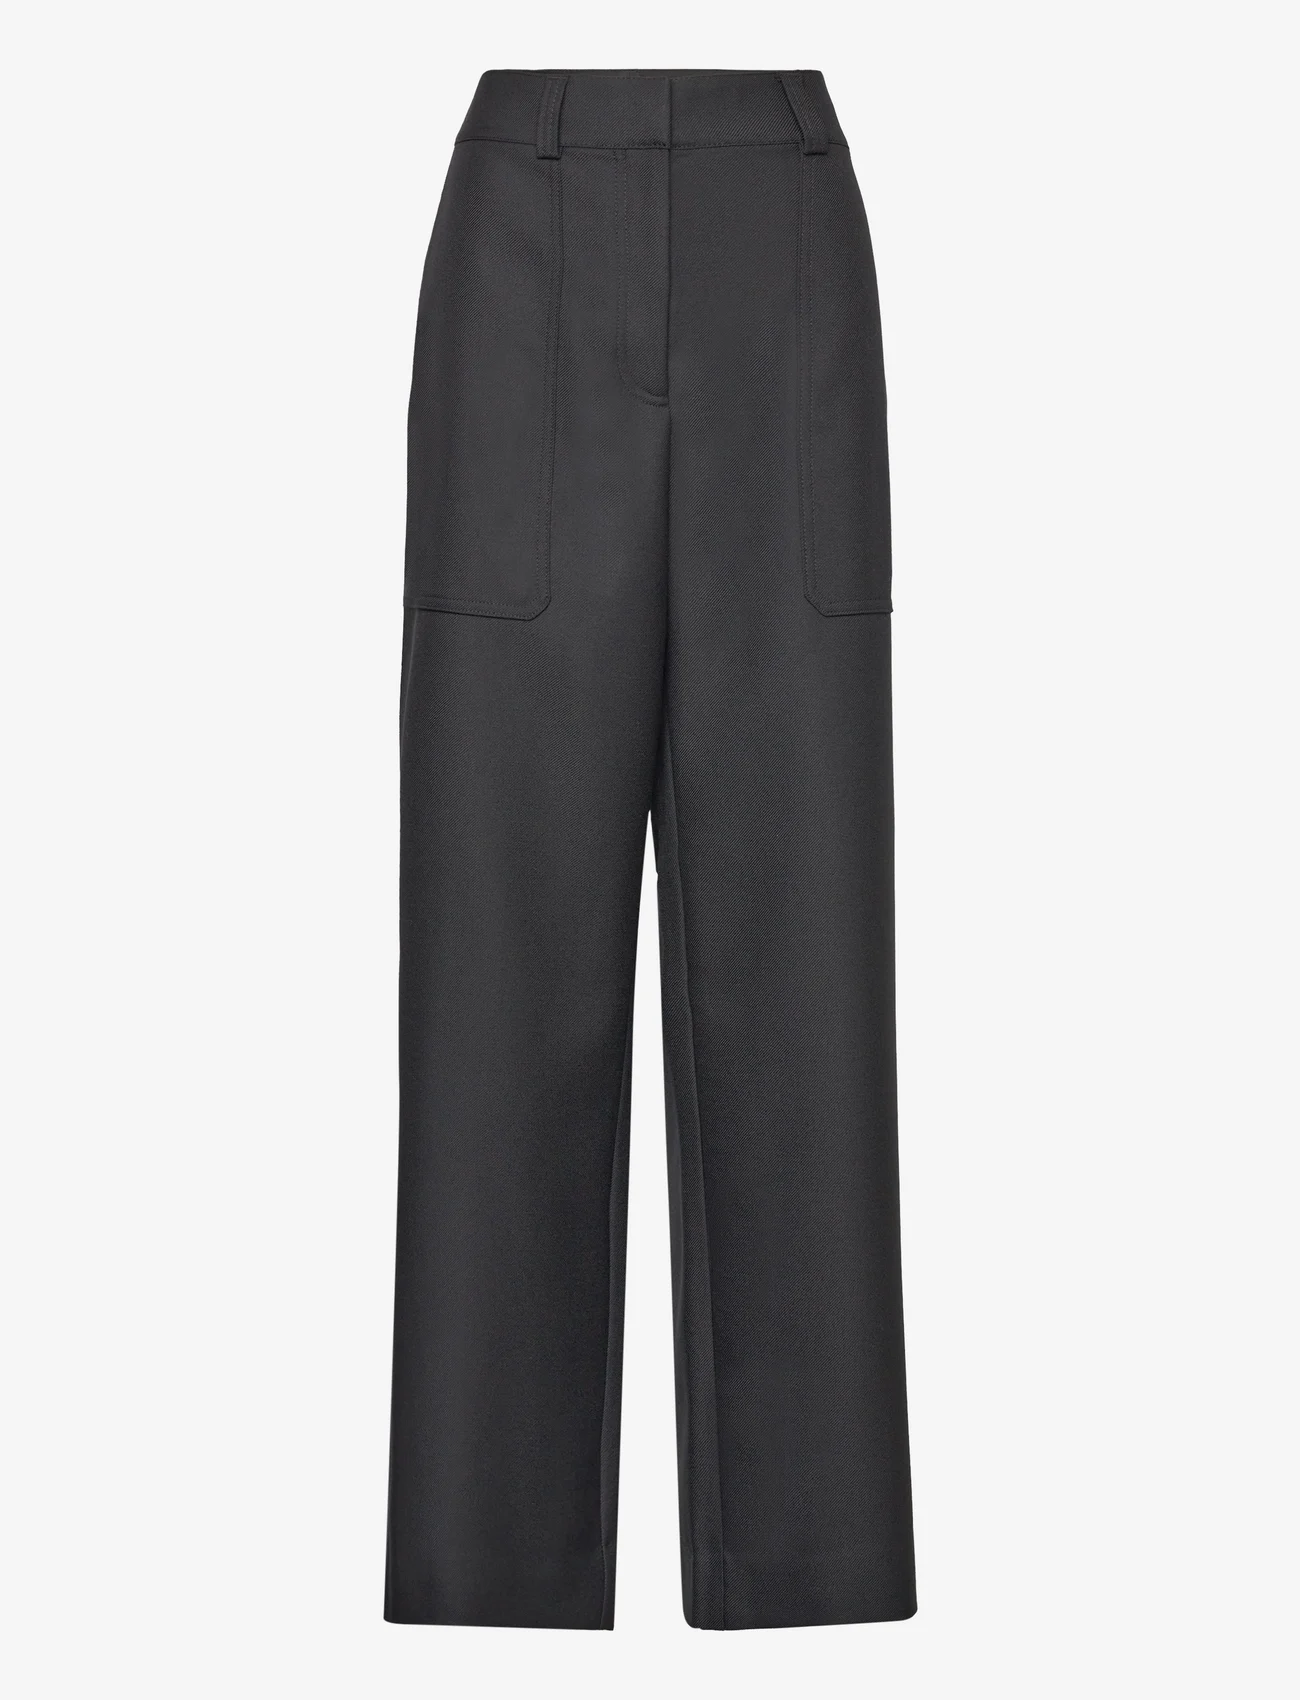 BOSS - Teleah - tailored trousers - black - 0